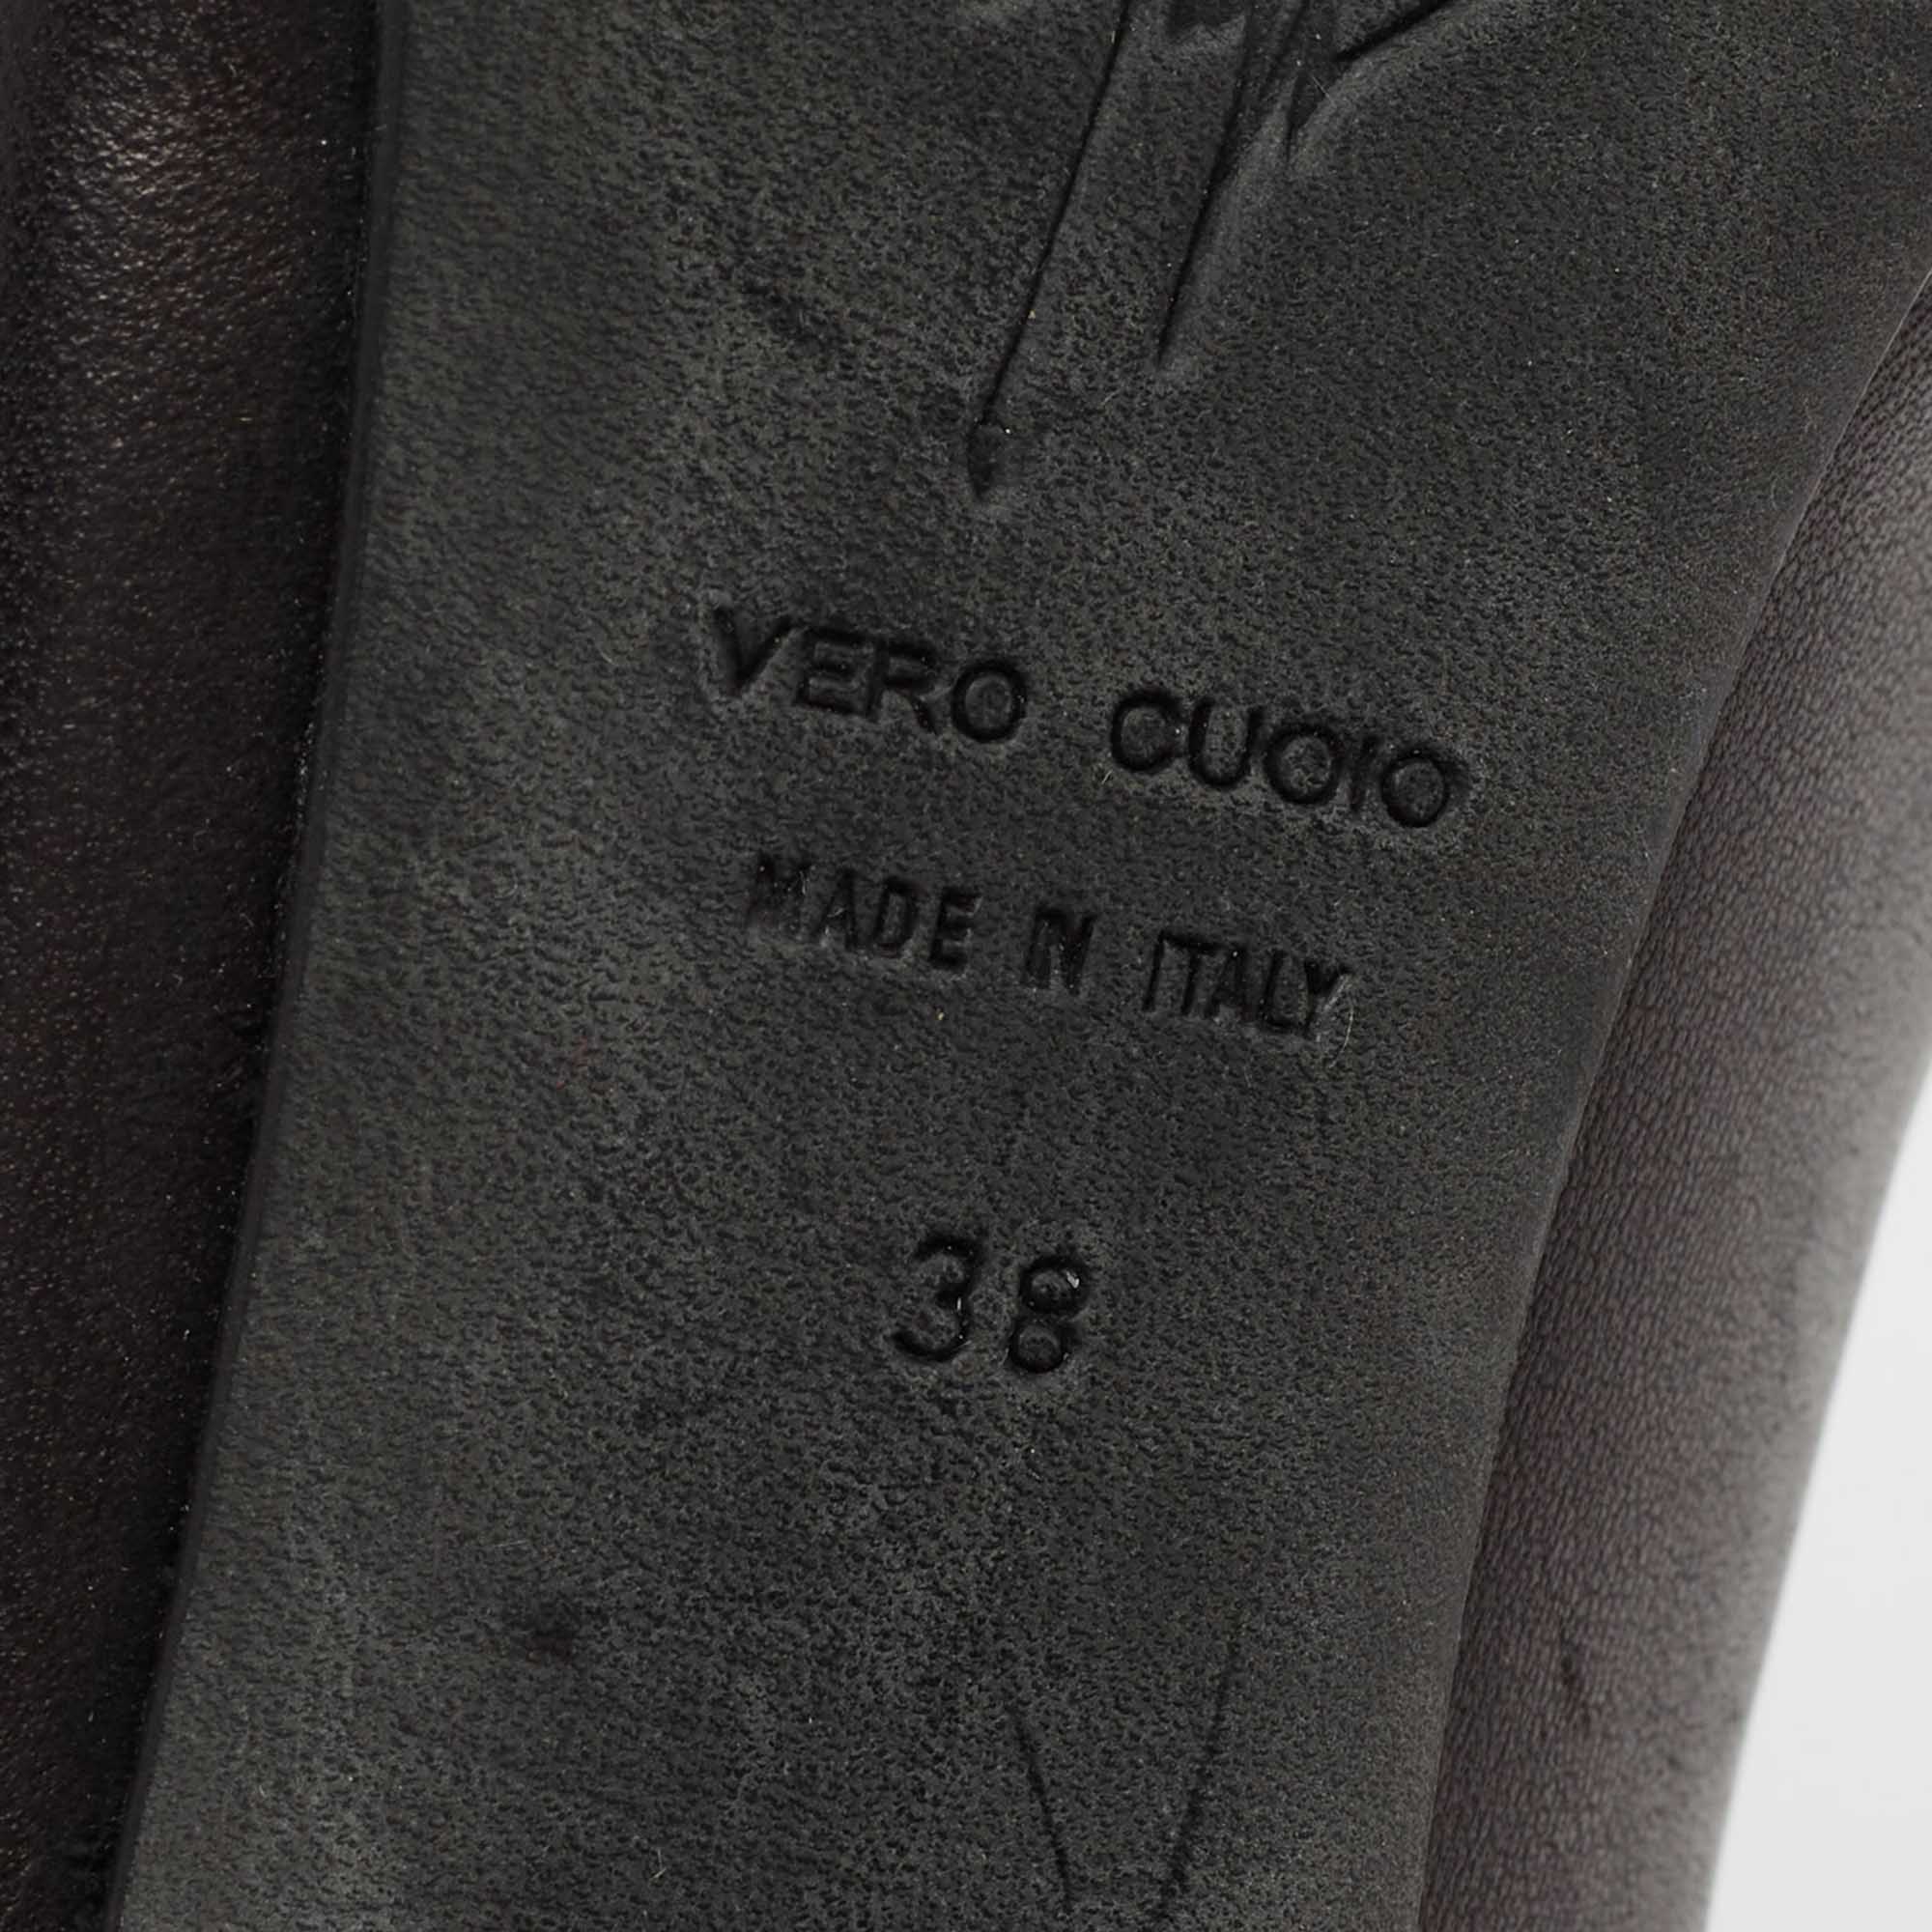 Giuseppe Zanotti Black Leather Bow Detail Peep Toe Pumps Size 38